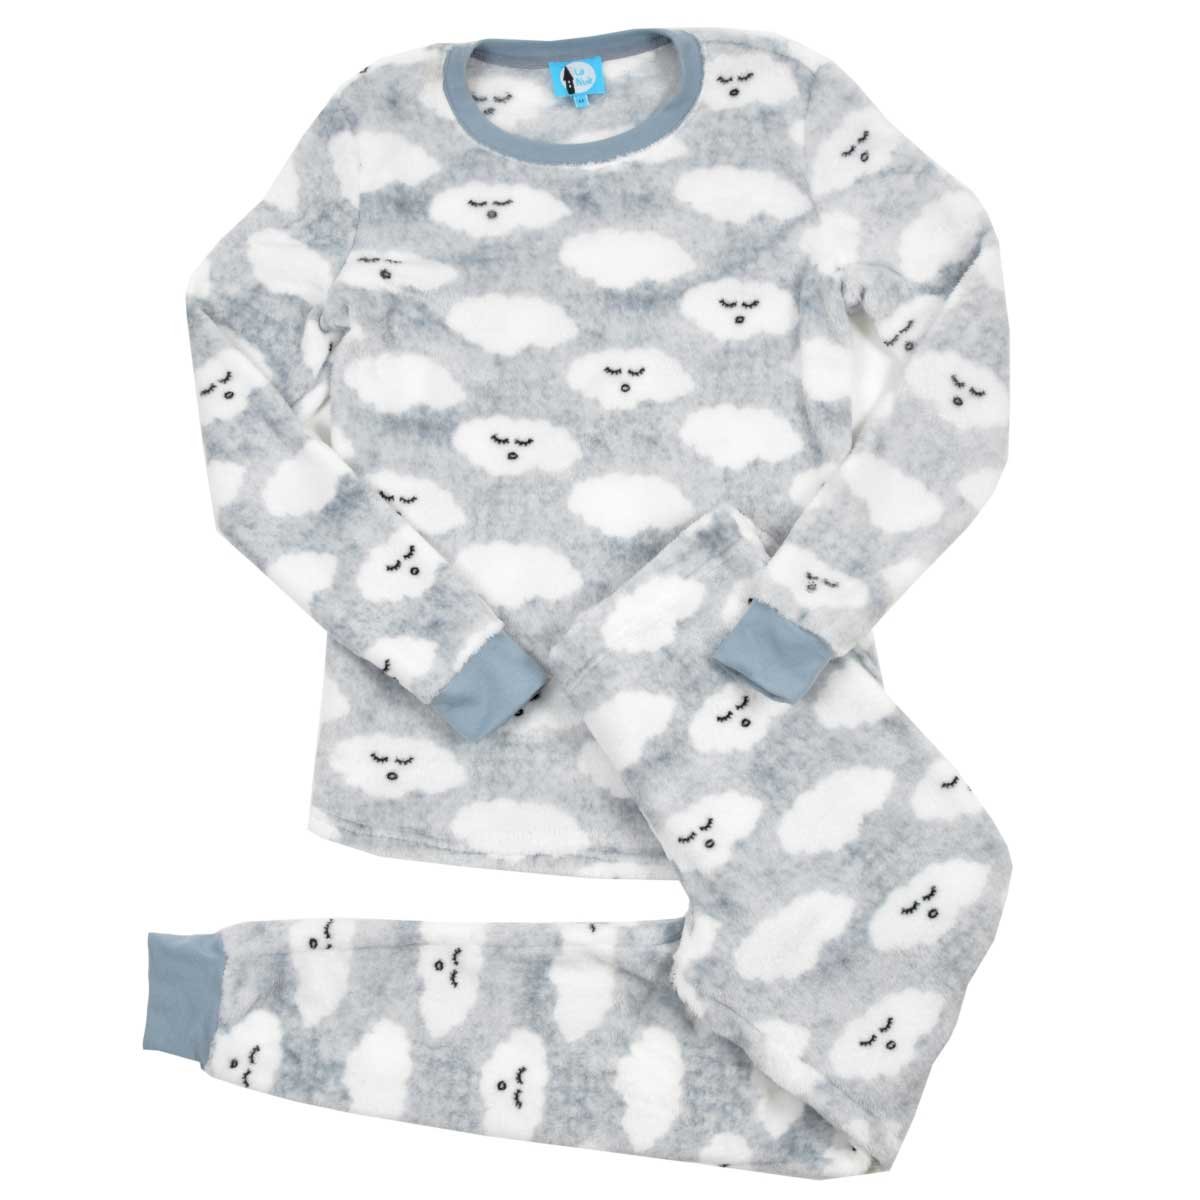 Pijama Flannel con Nubes la Nuit